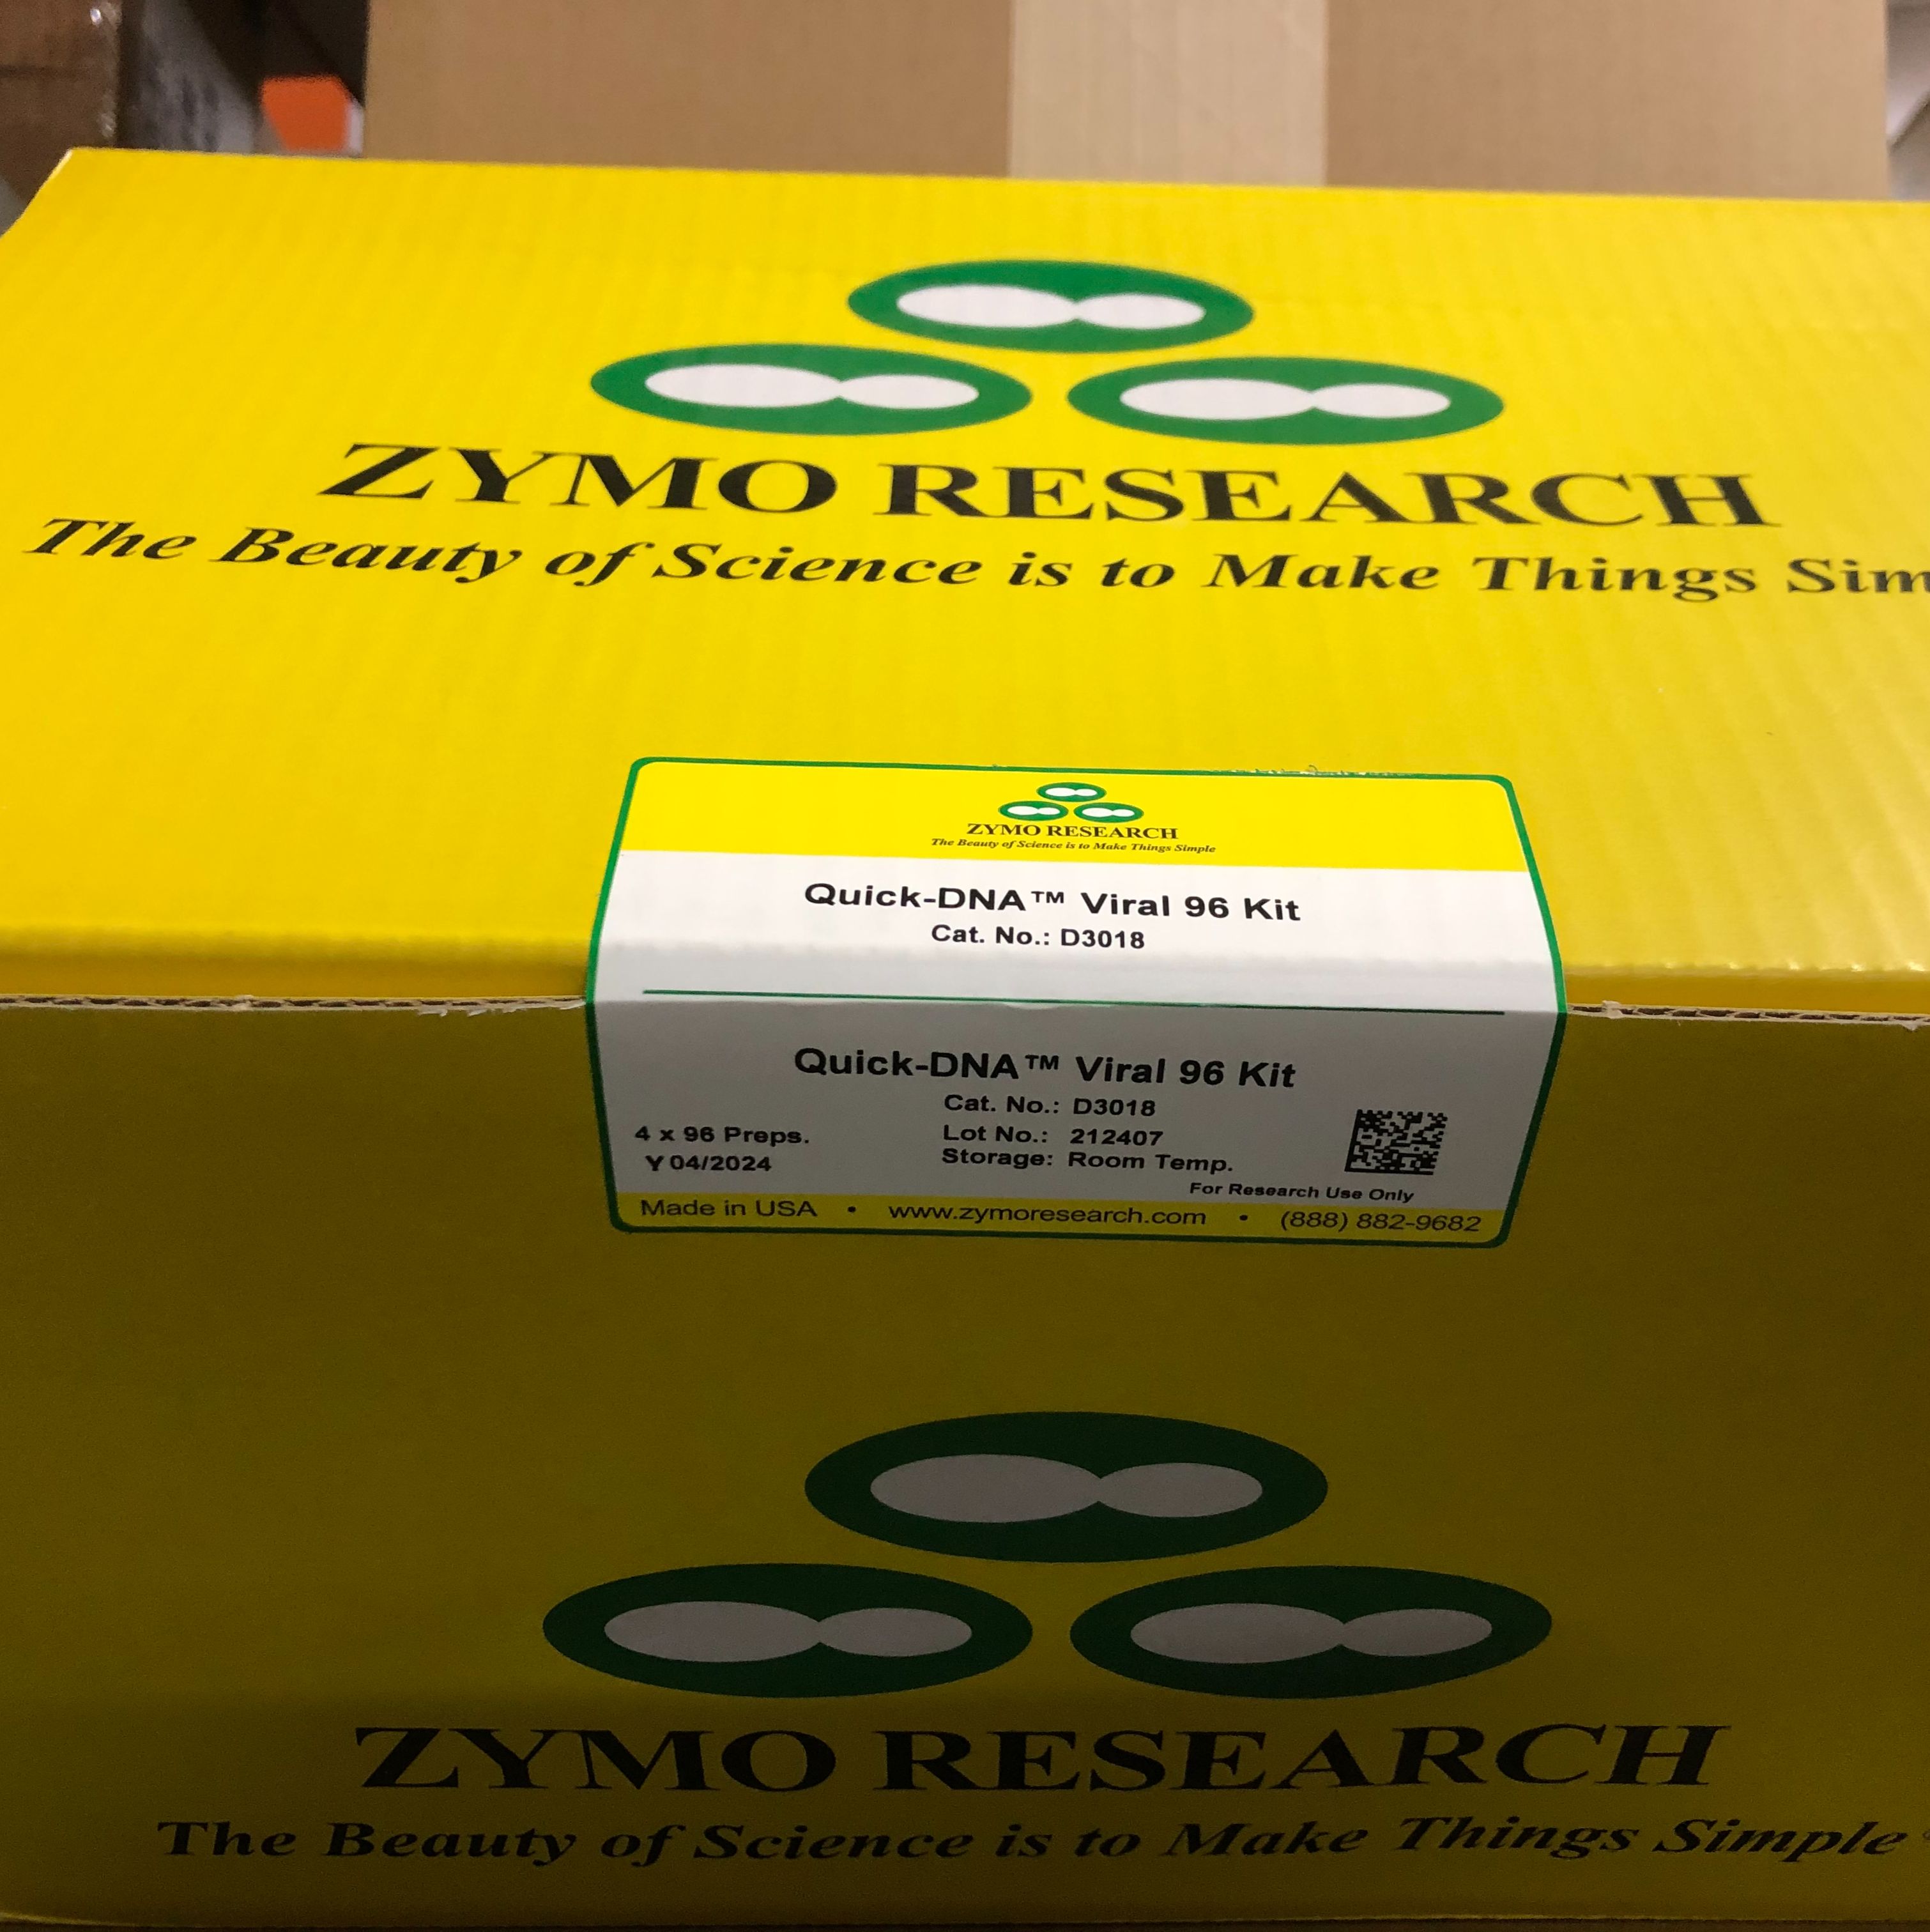 Zymo Research货号D3018快速DNA™病毒纯化试剂盒13611631389上海睿安生物